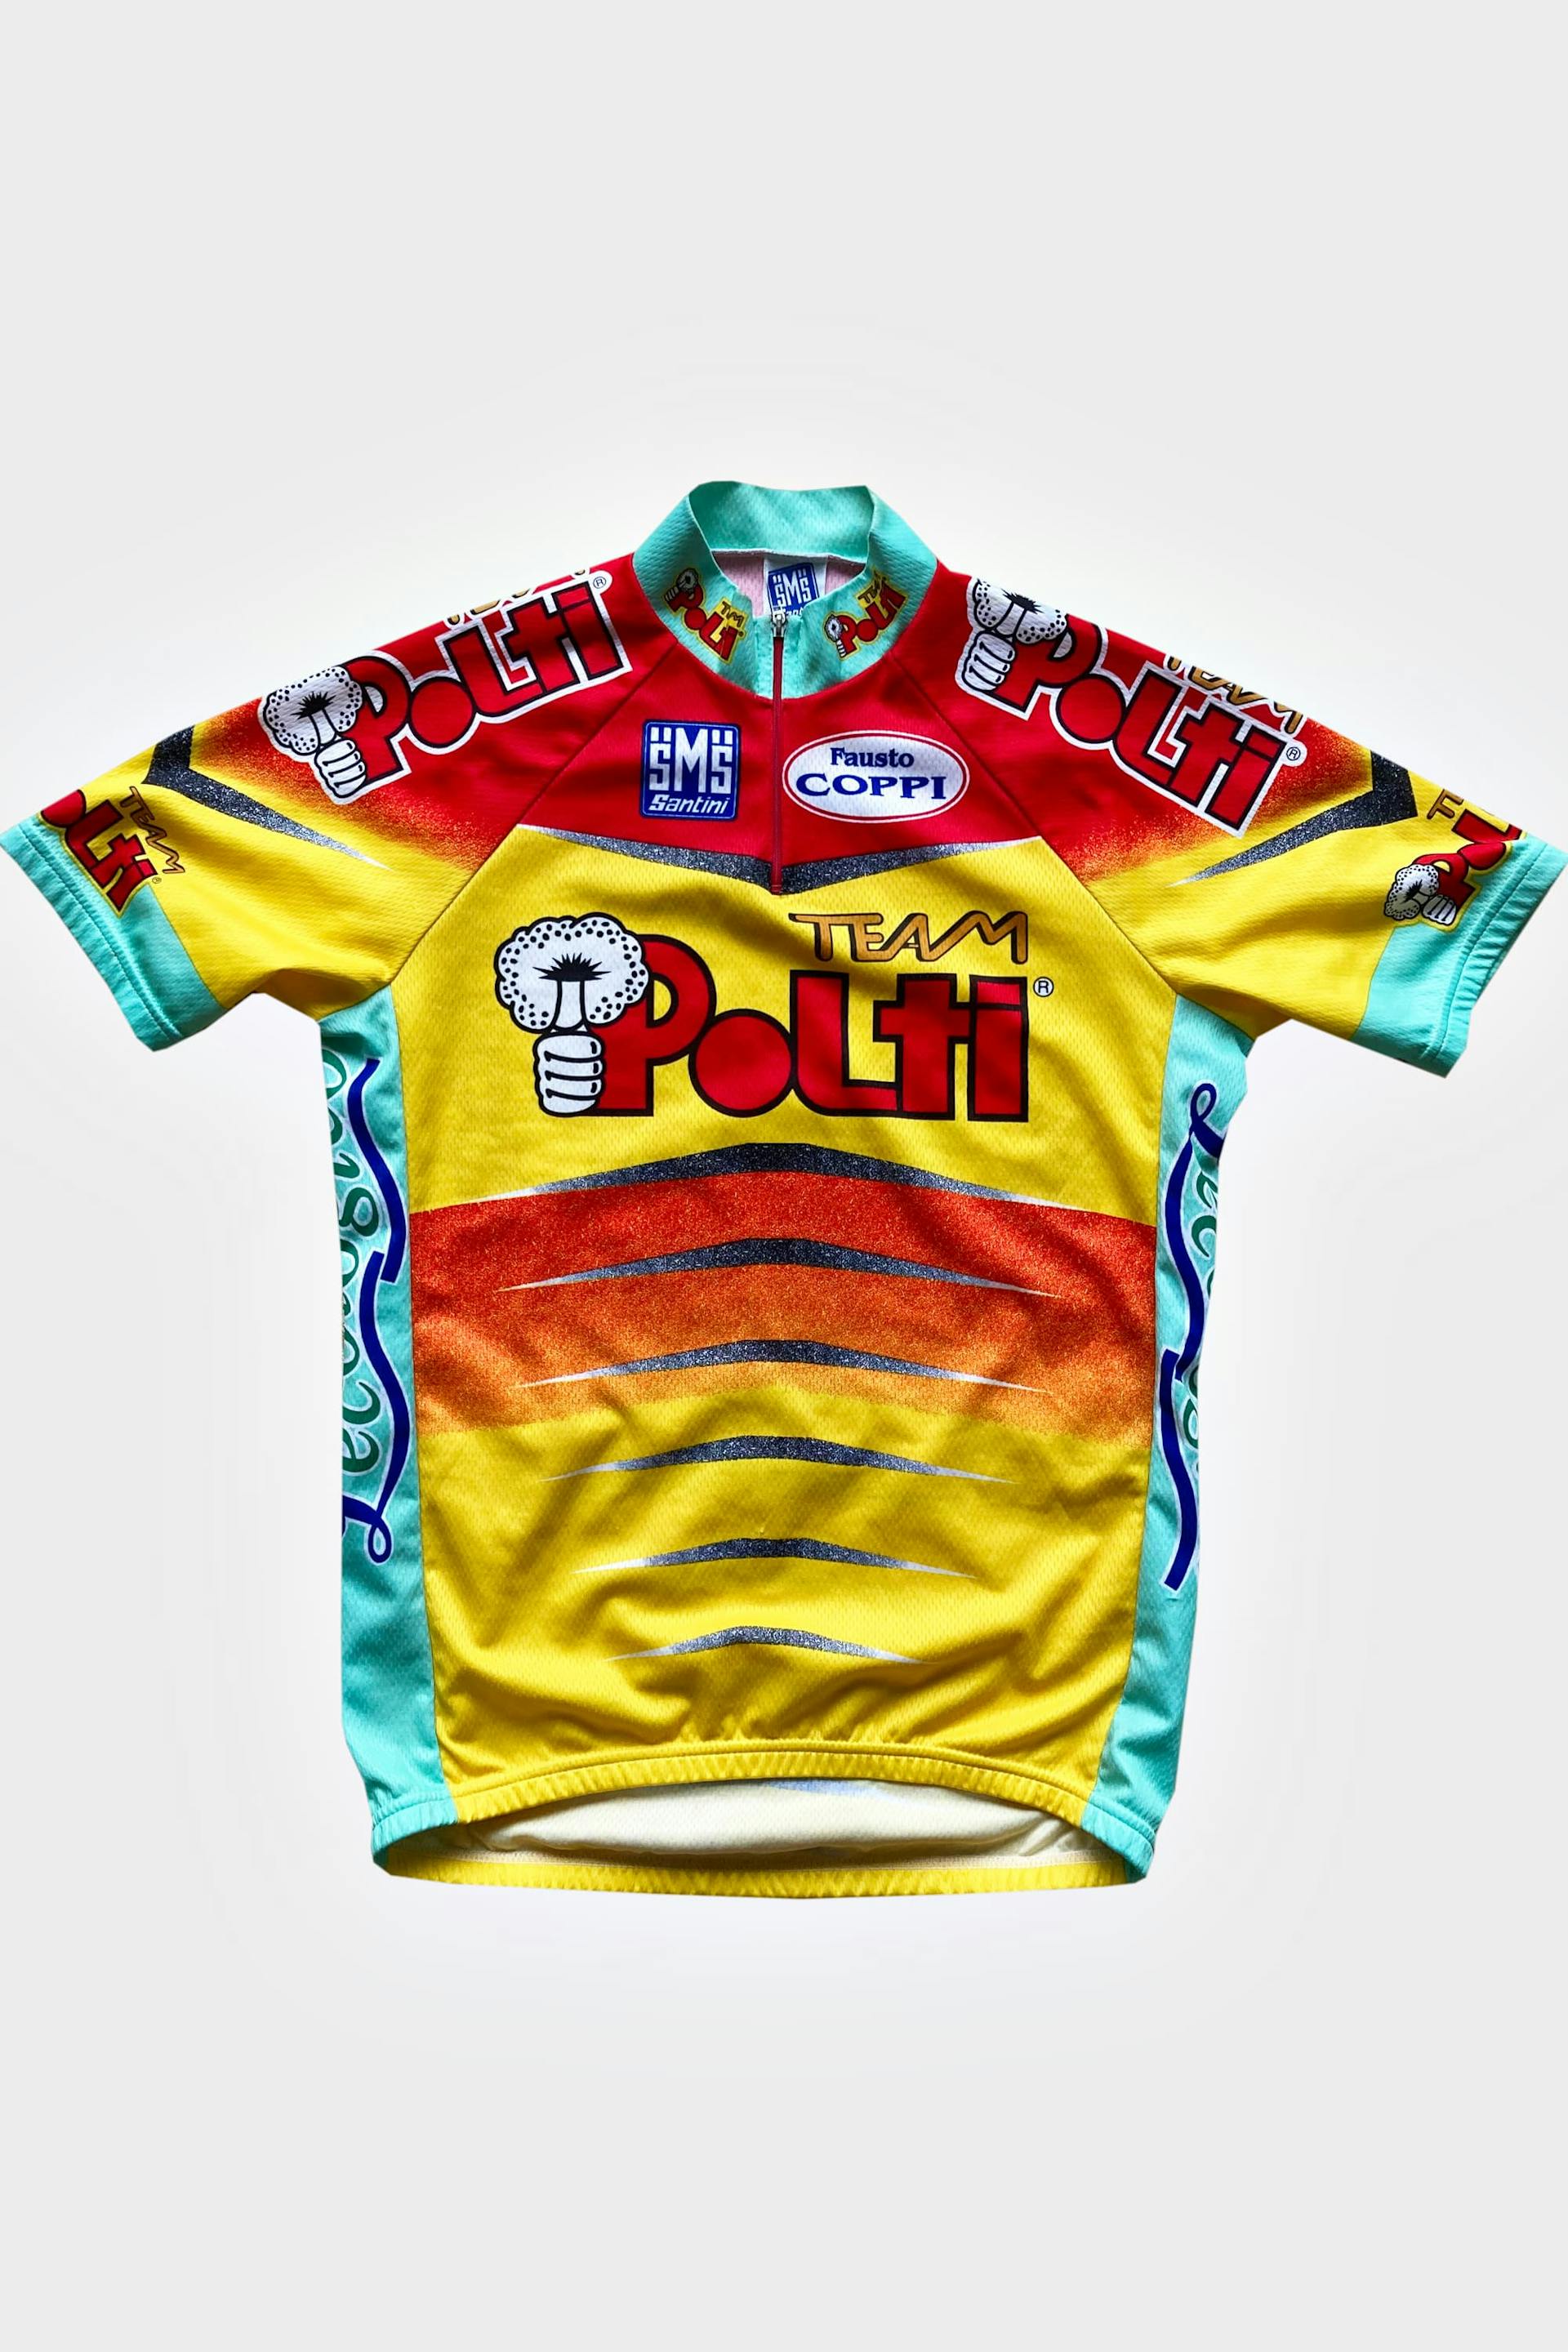 Team Polti Cycling Jersey 2000